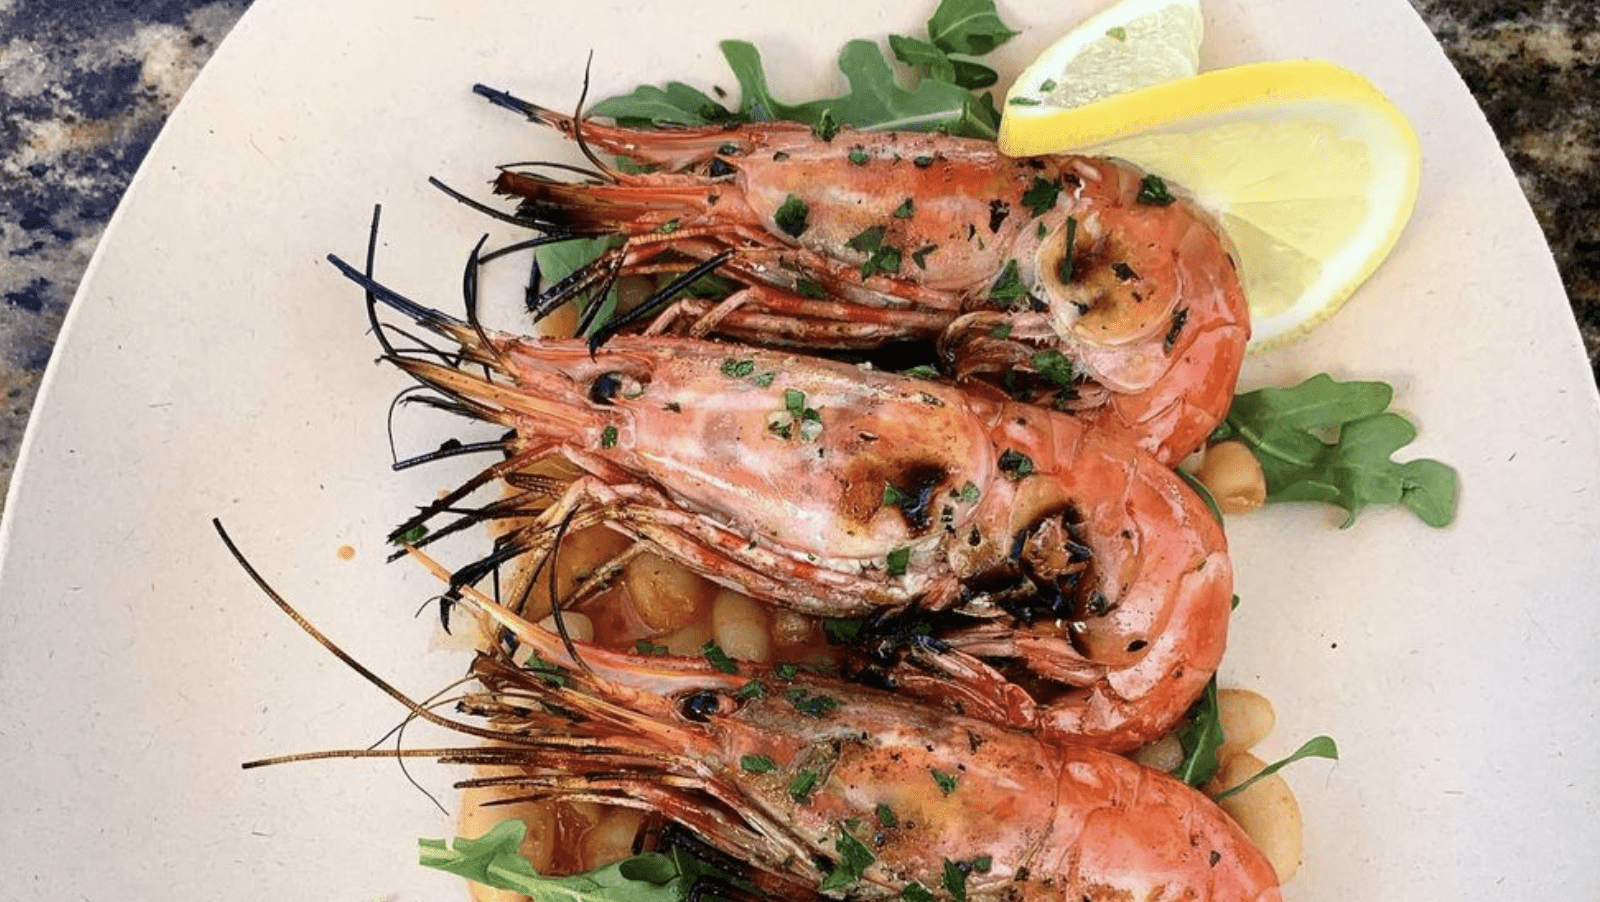 Shrimp at La Balena restaurant for dinner in Monterey